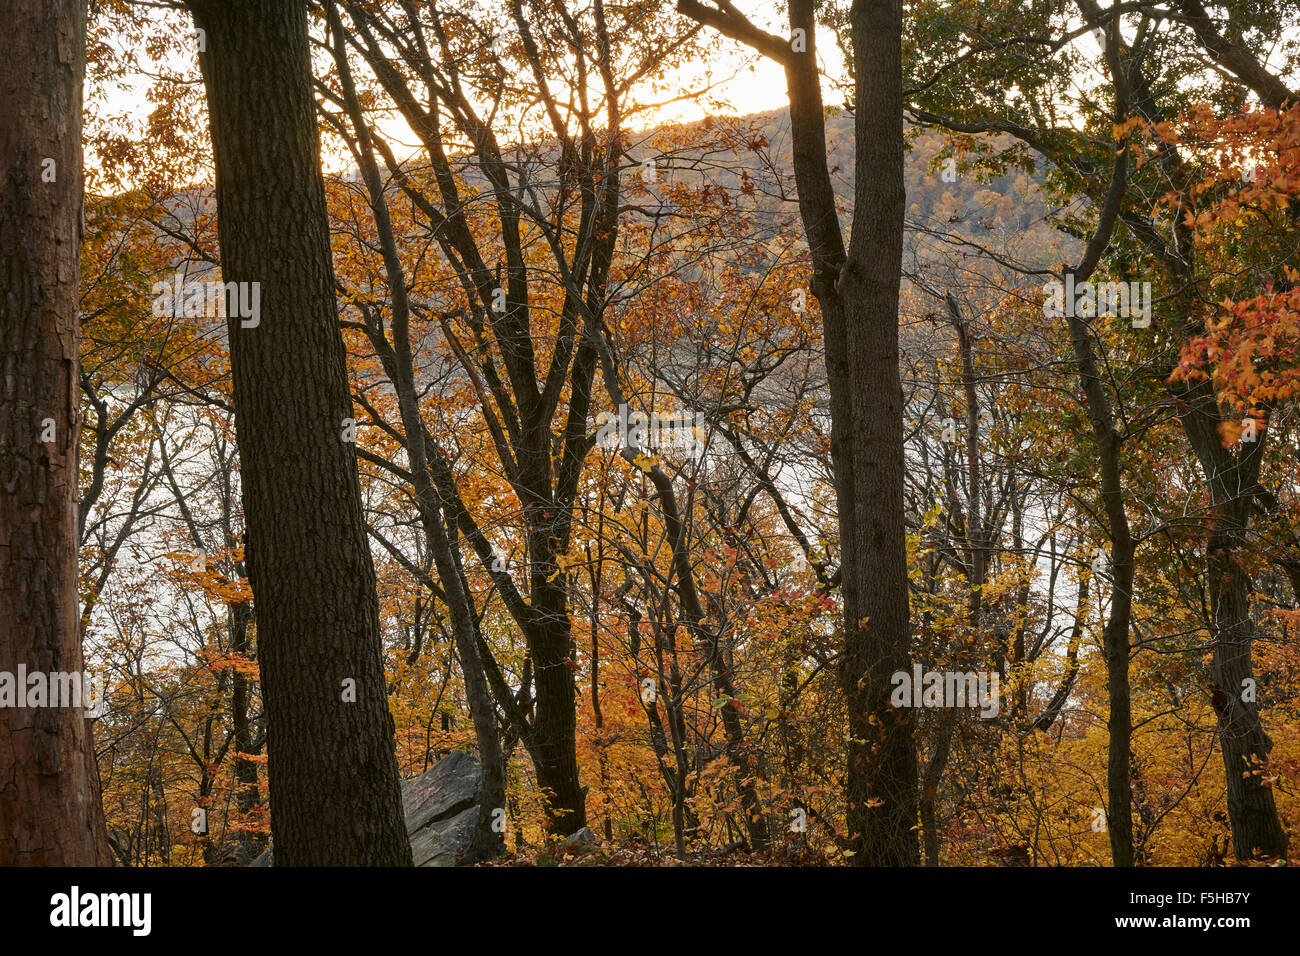 Susquehanna River in Fall foliage near Marietta Pennsylvania, USA Stock Photo